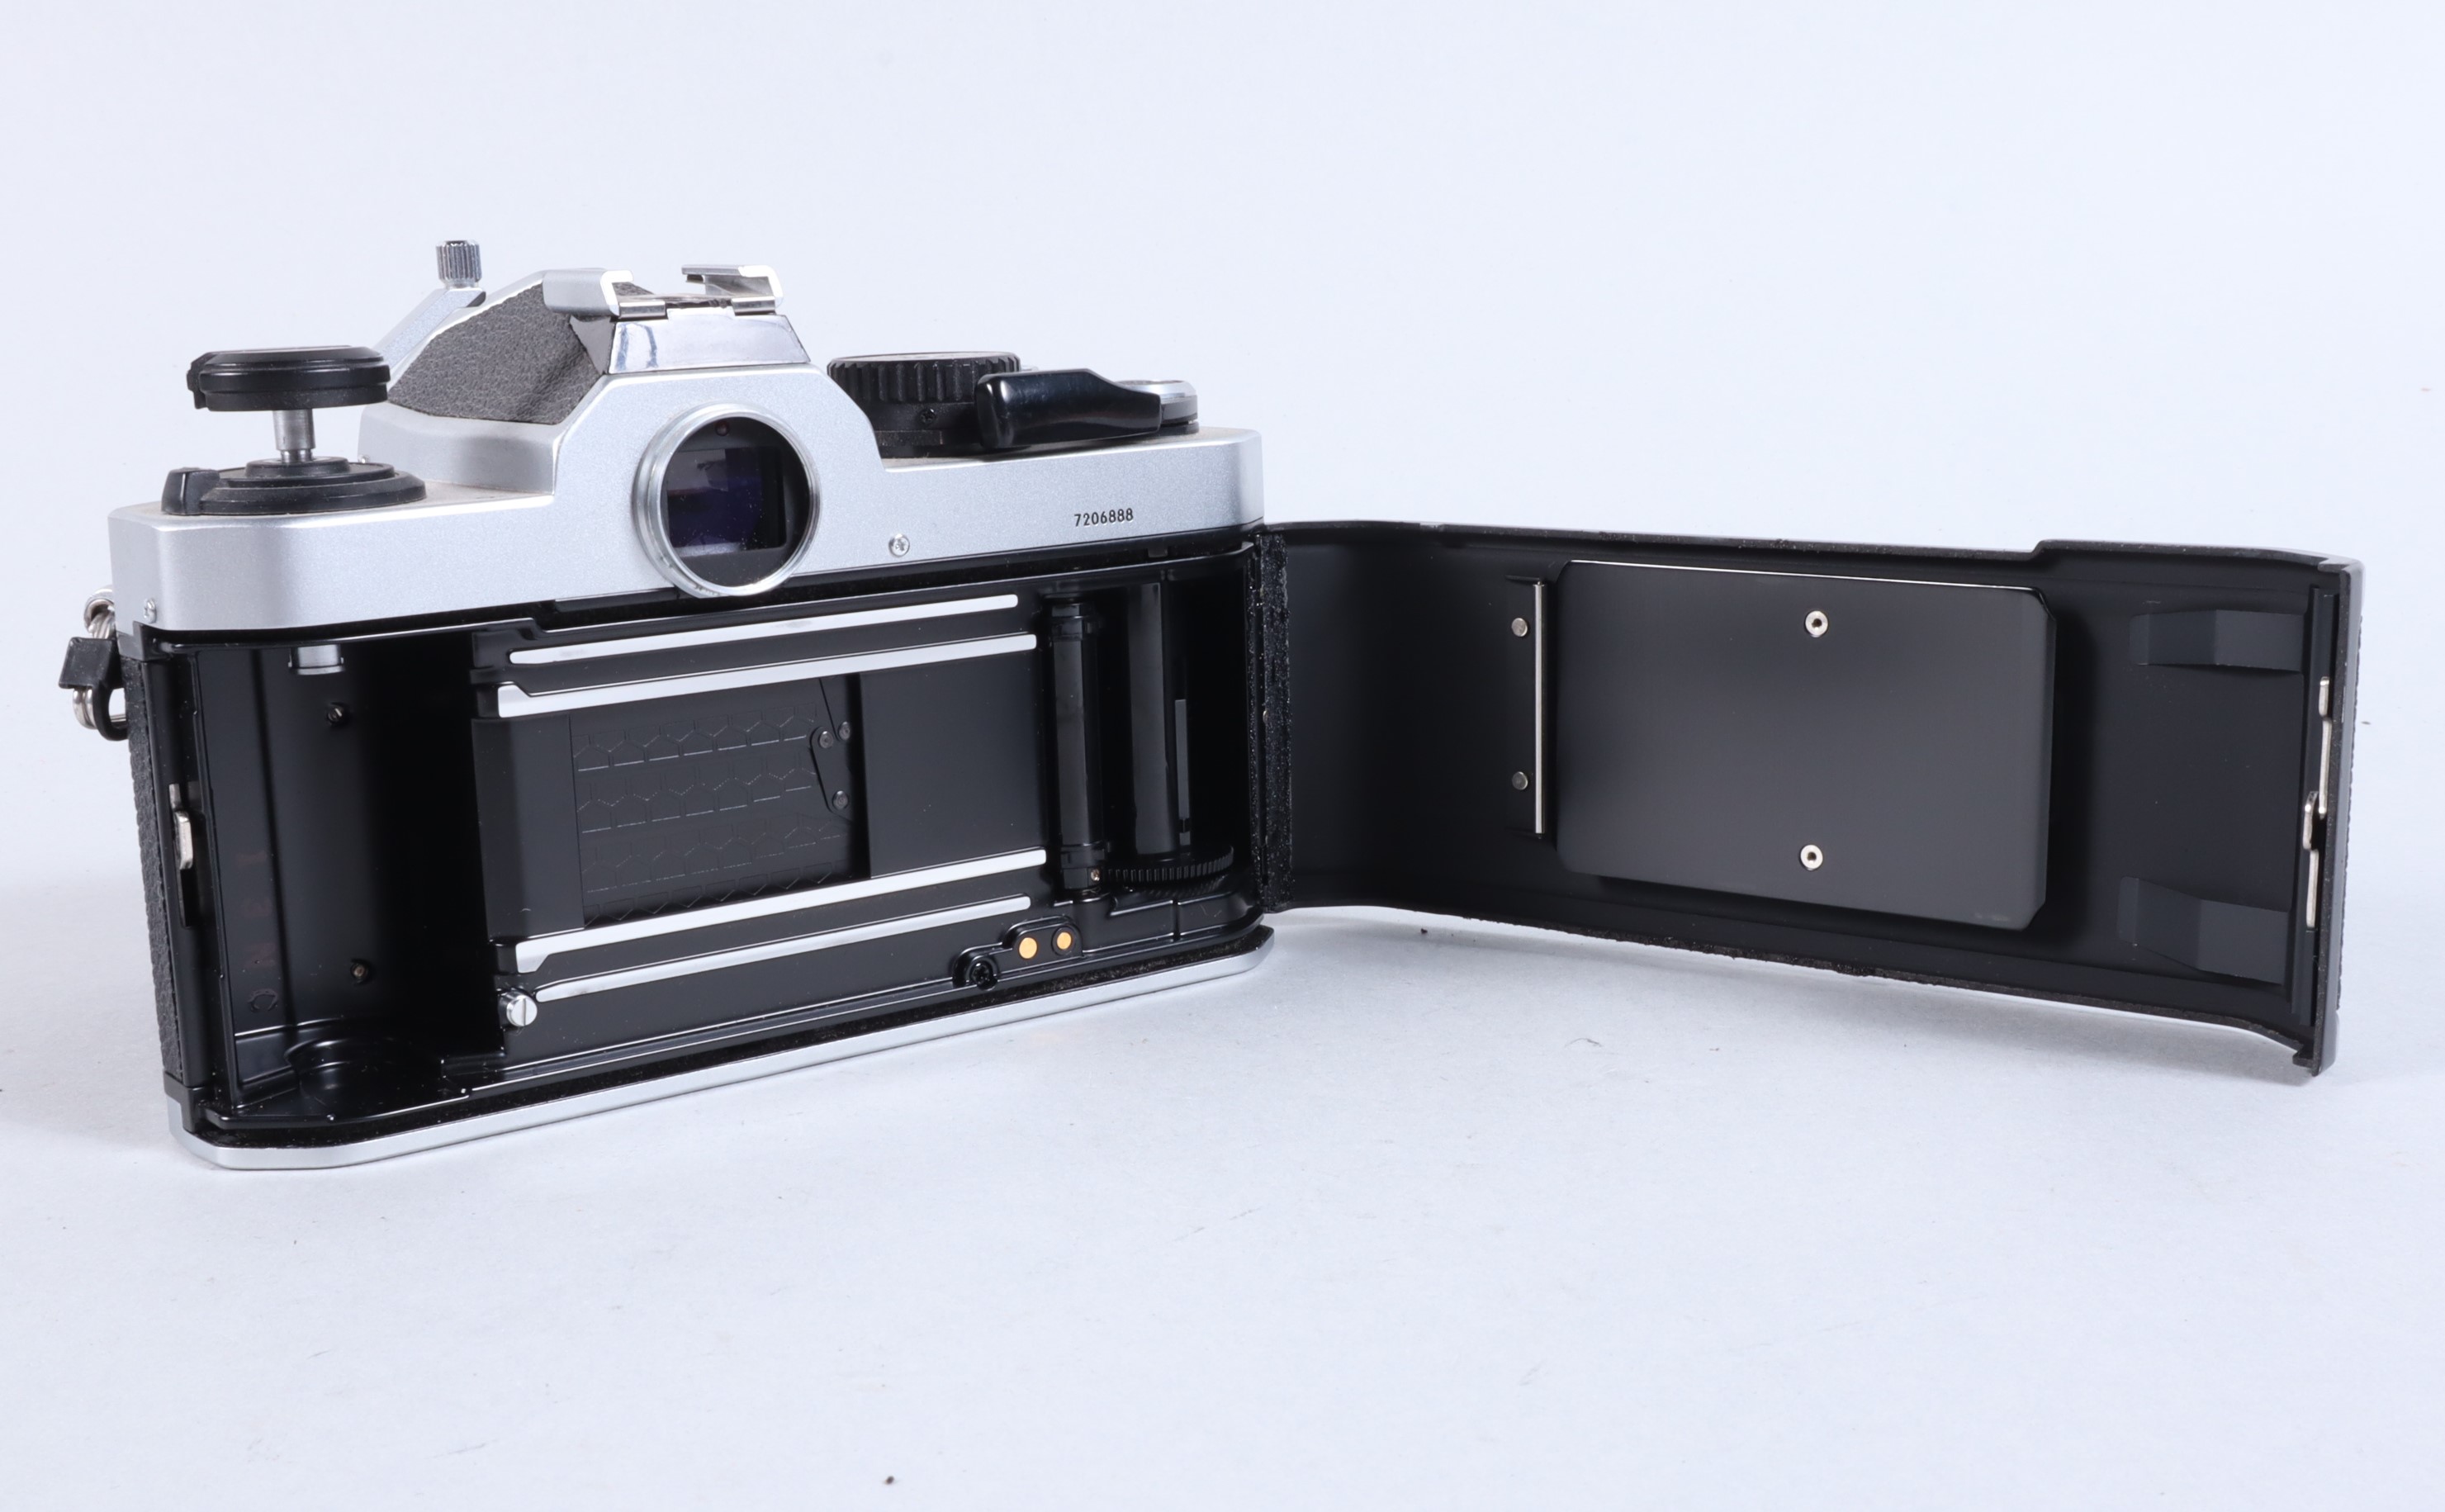 A Nikon FM2 SLR Camera, chrome, serial no 7206888, shutter working, meter responsive, self timer - Image 6 of 6